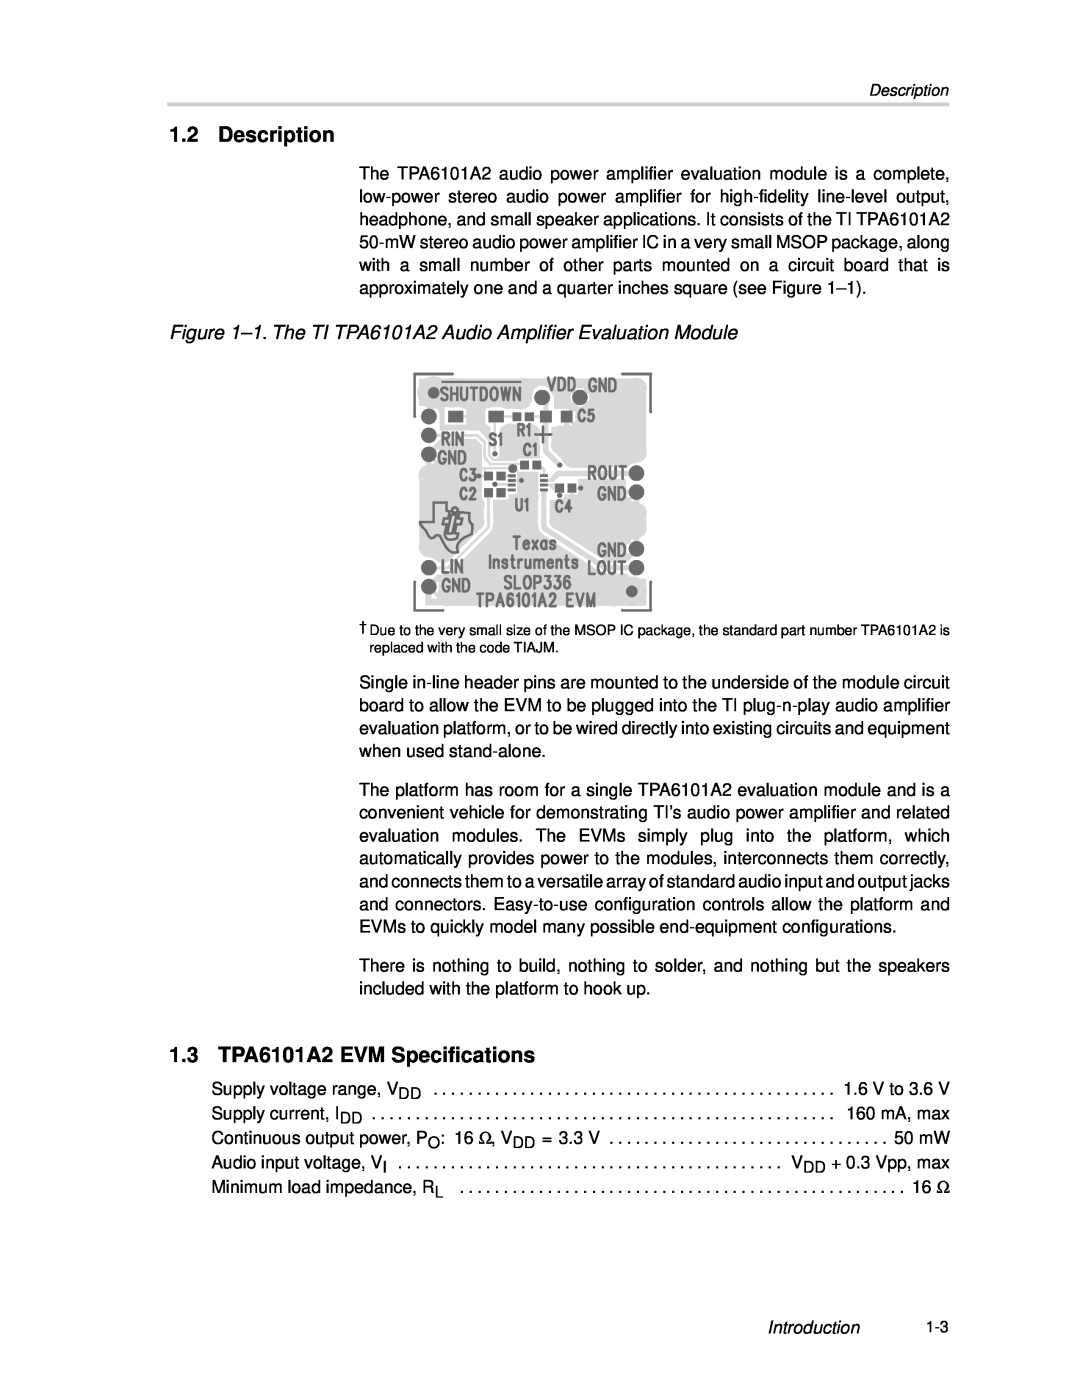 Texas Instruments manual Description, 1.3 TPA6101A2 EVM Specifications, Introduction 